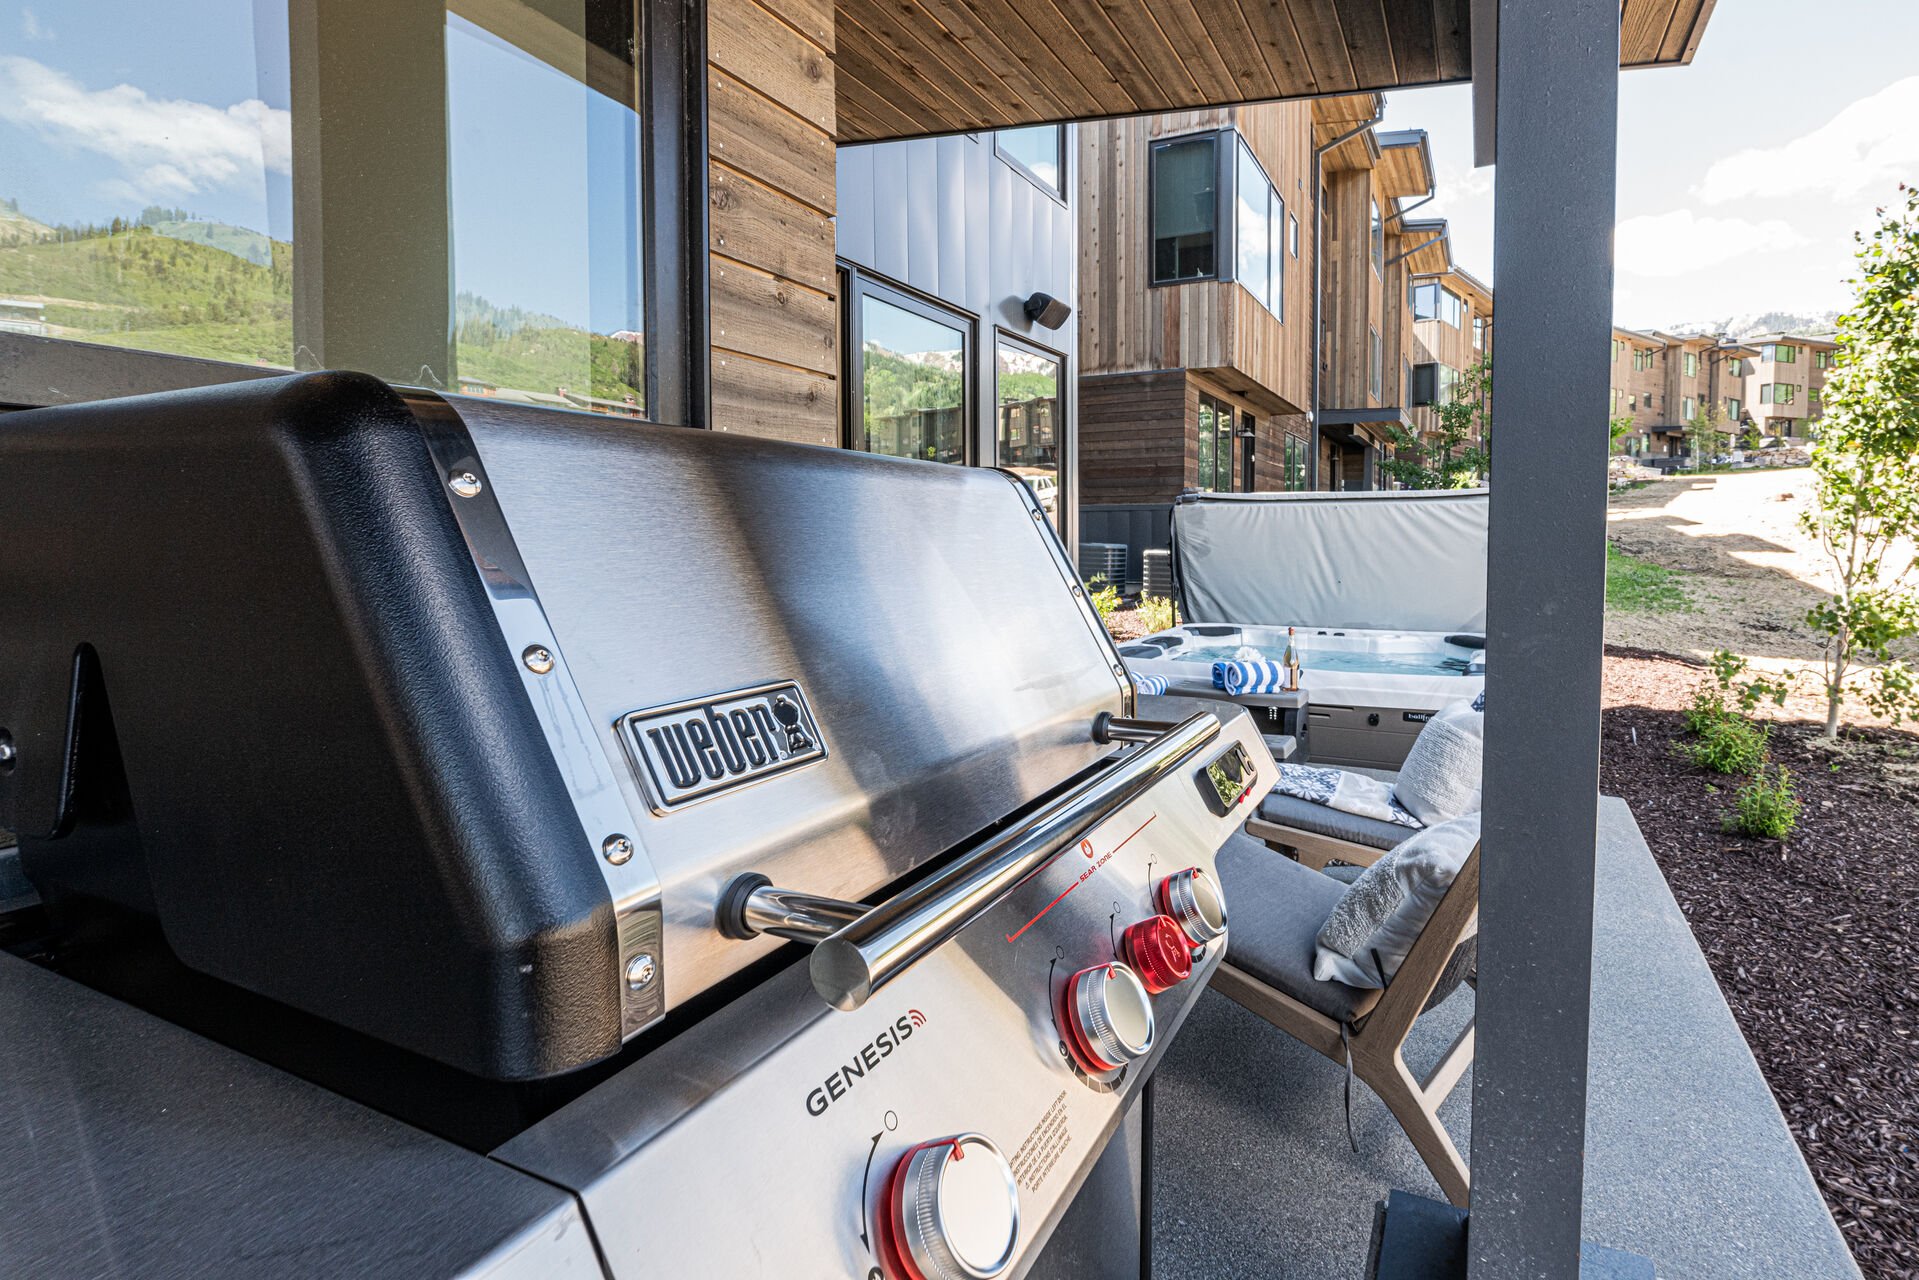 Weber propane grill on private patio